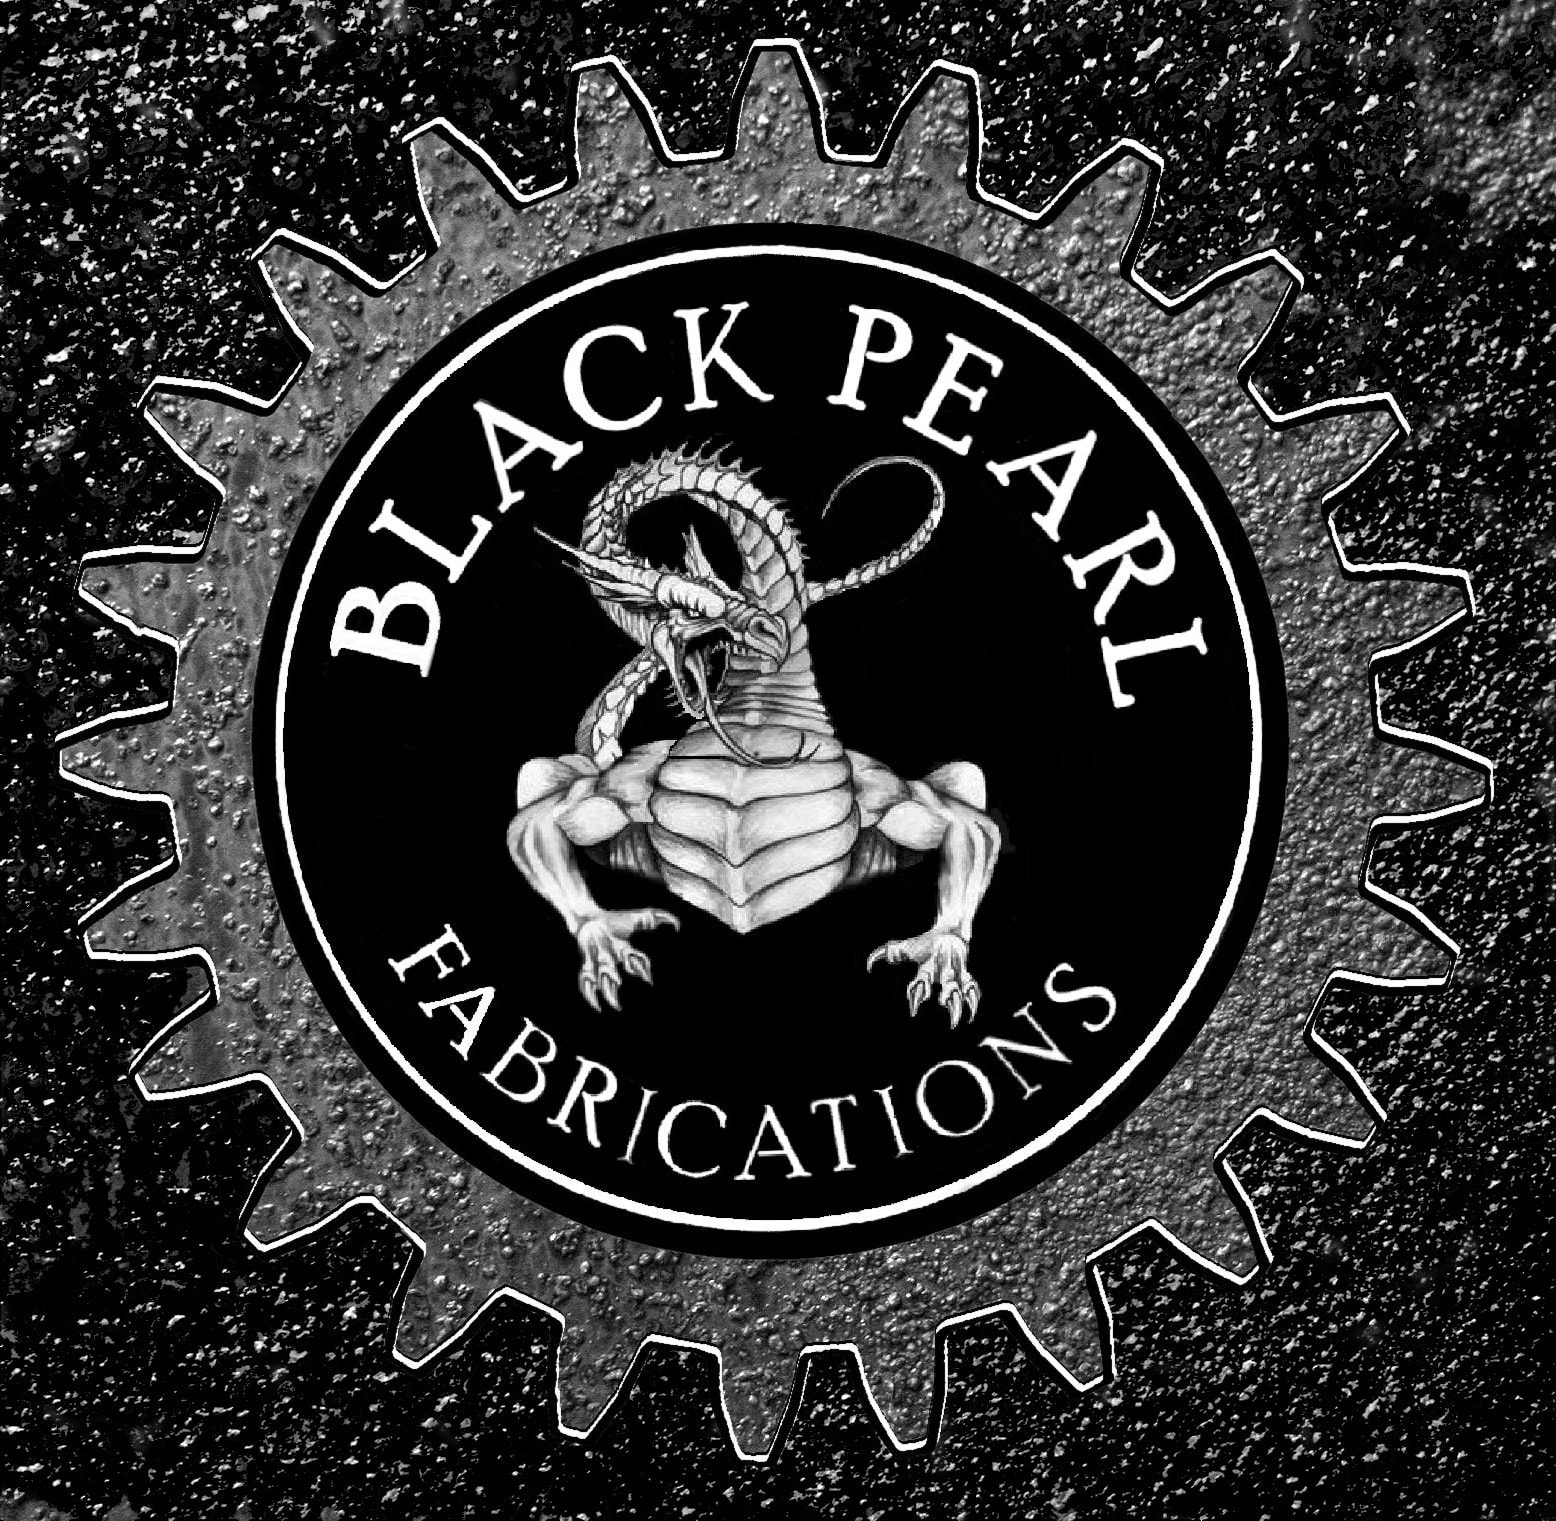 Black Pearl Fabrication